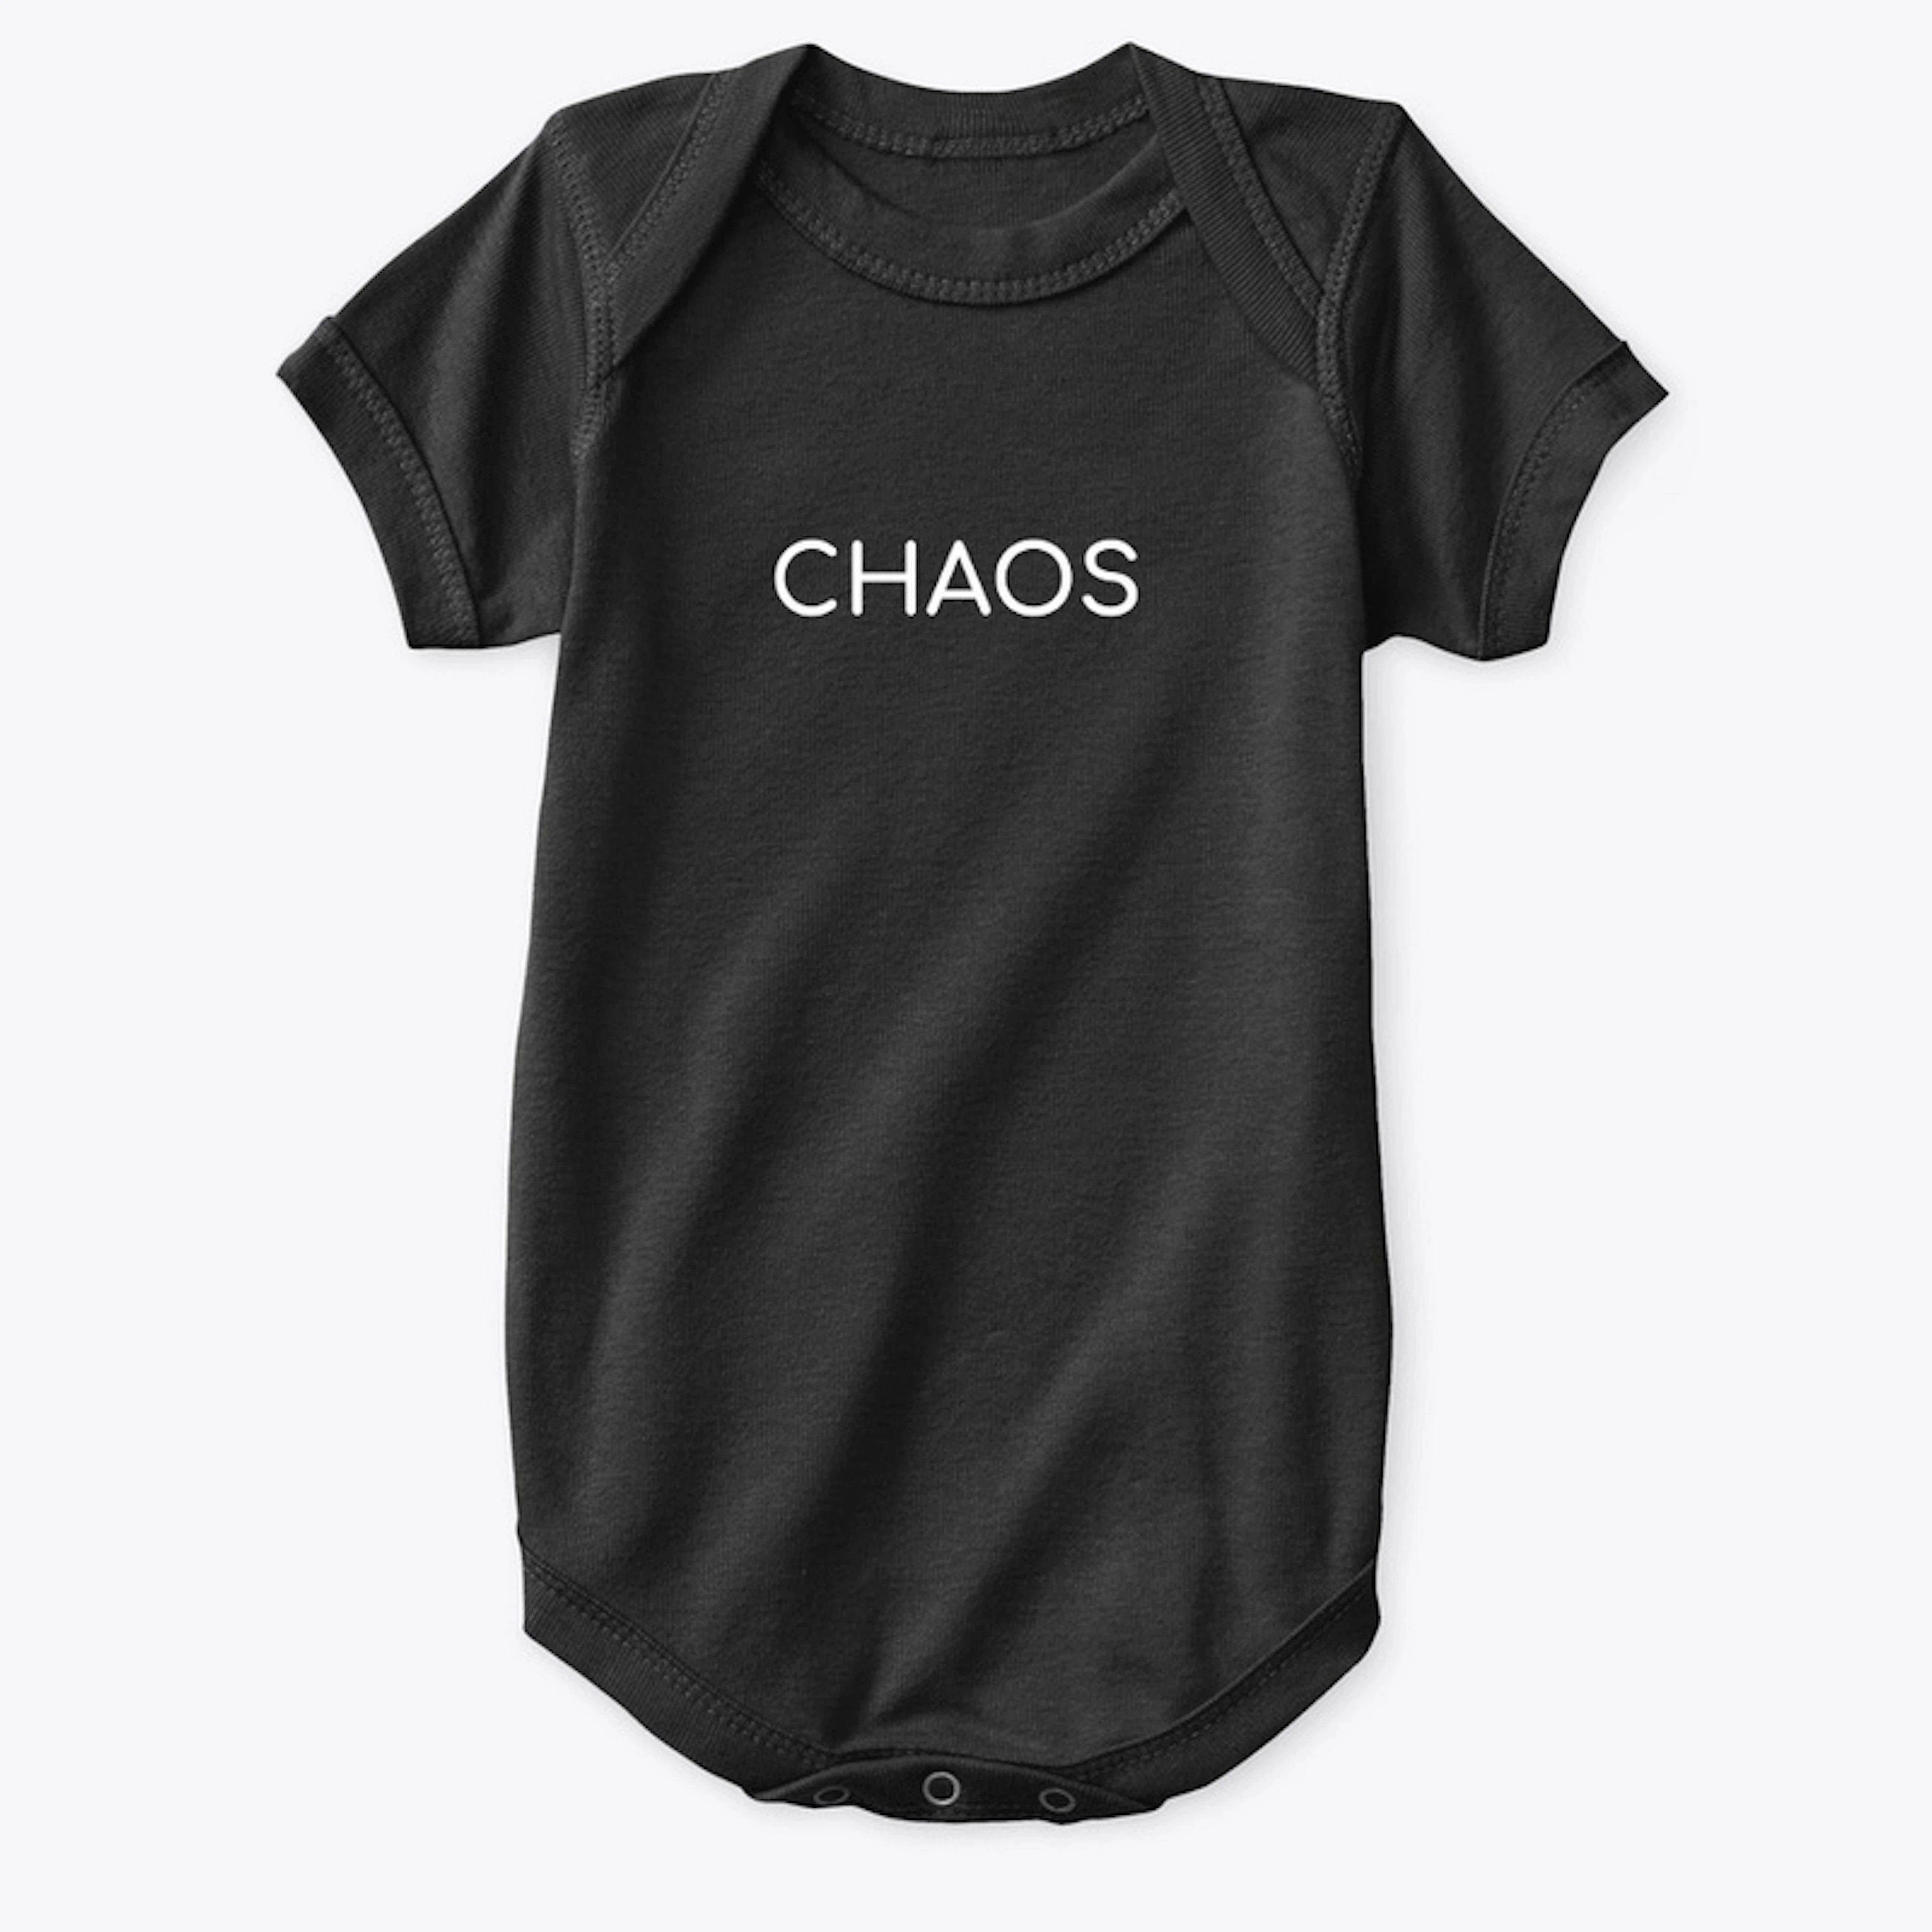 Chaos shirt for boy